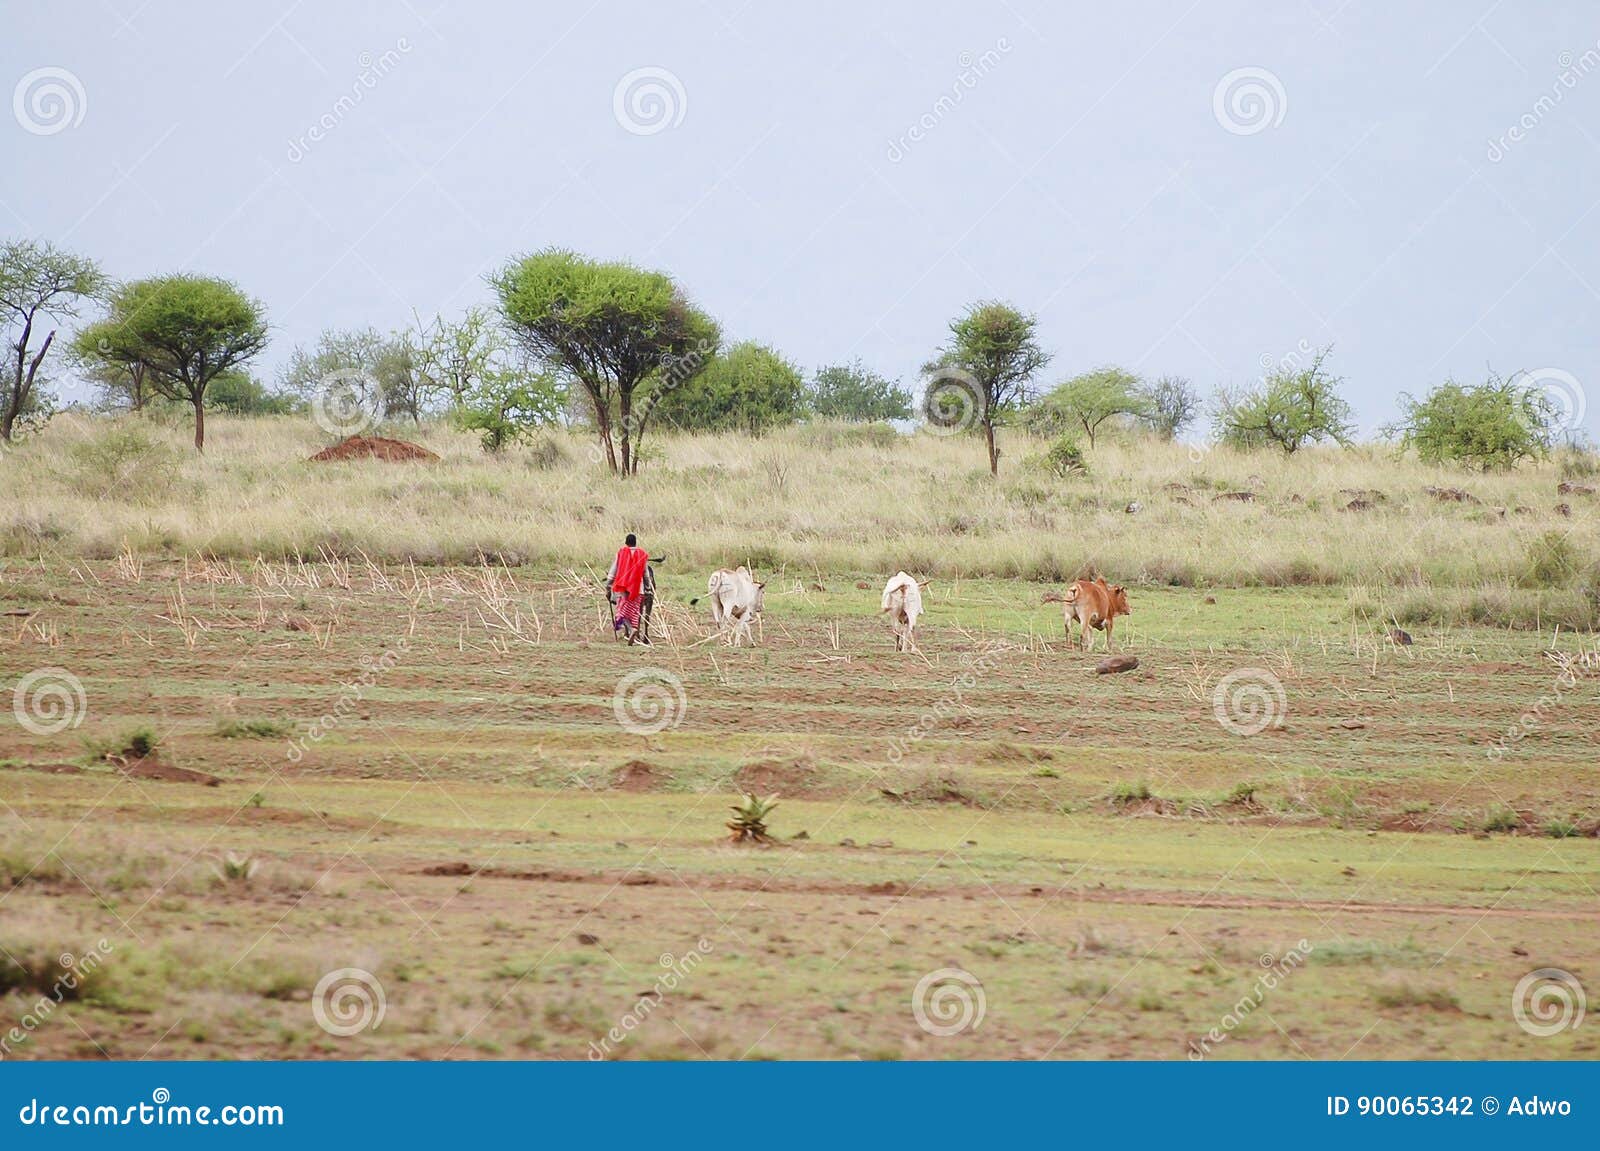 african cattle herder - tanzania